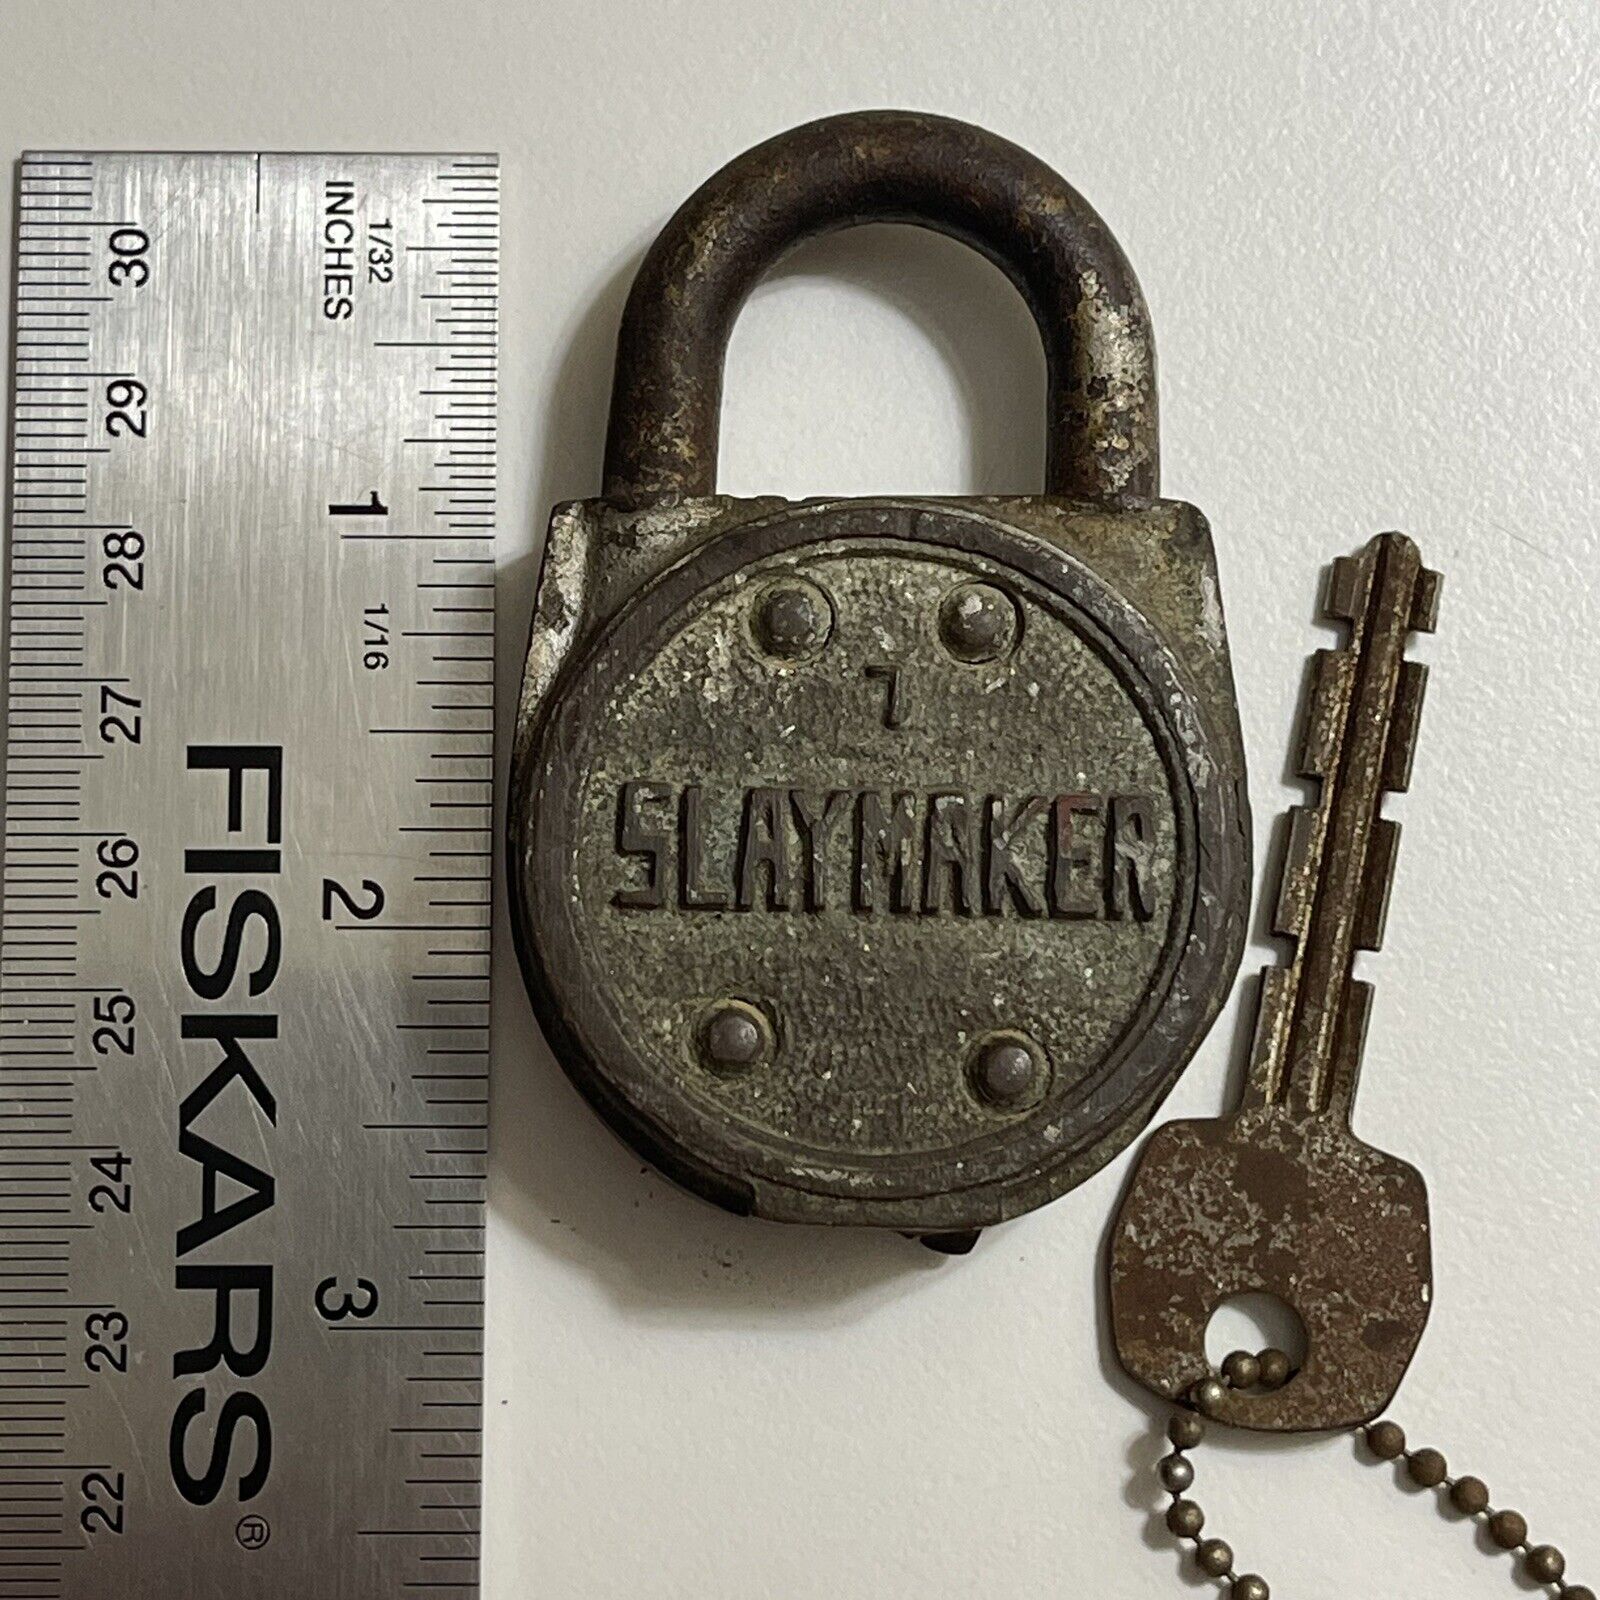 SLAYMAKER 7 BRASS WARDED PADLOCK & KEY OLD ANTIQUE LOCK VINTAGE LOCK USA MADE